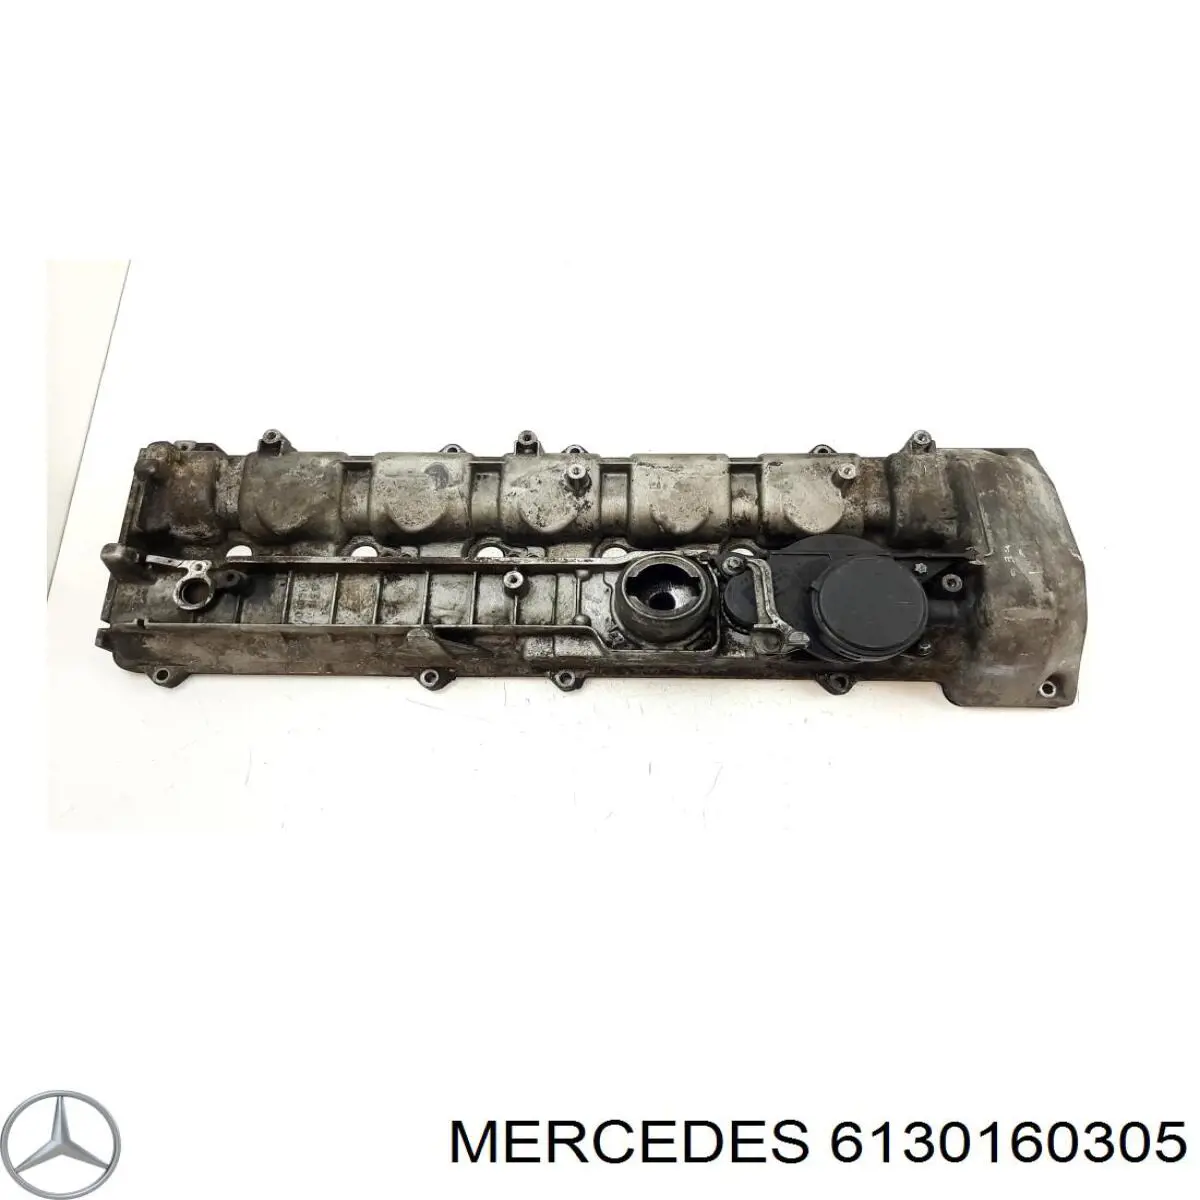 Tampa de válvulas para Mercedes E (W210)